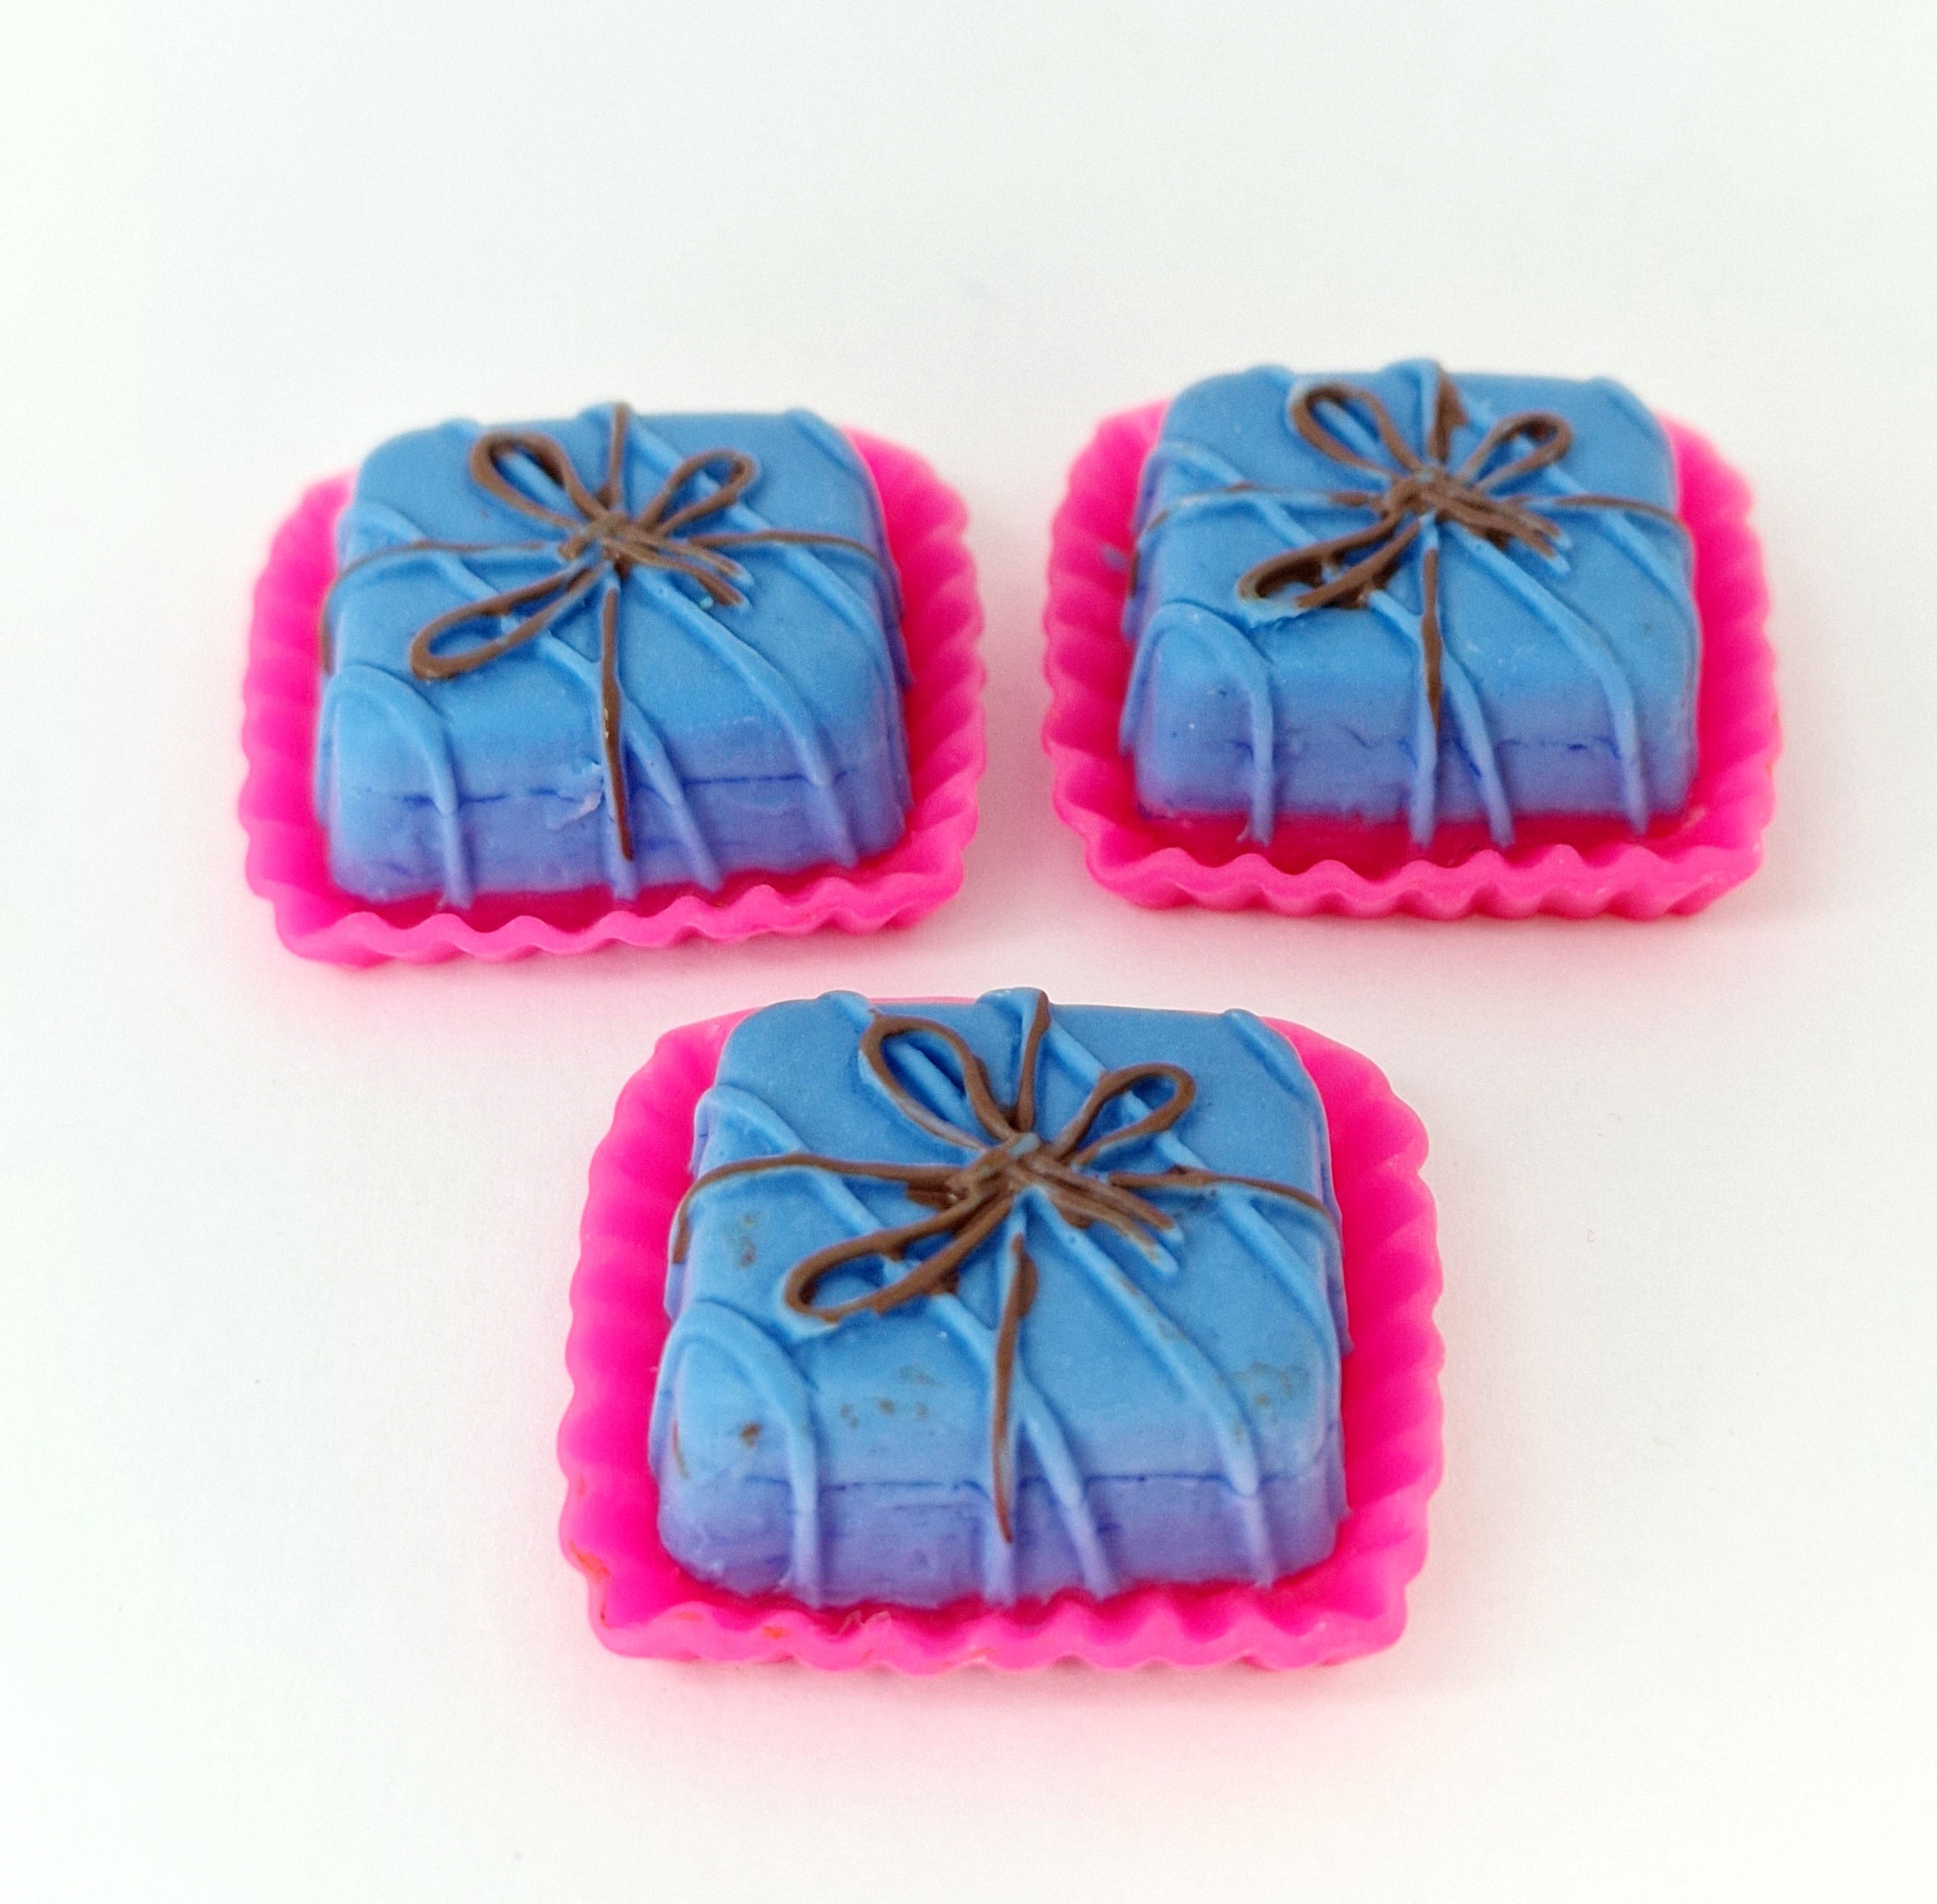 MajorCrafts 4pcs 28mm Blue and Pink Flat Back Resin Cake Kawaii Cabochons